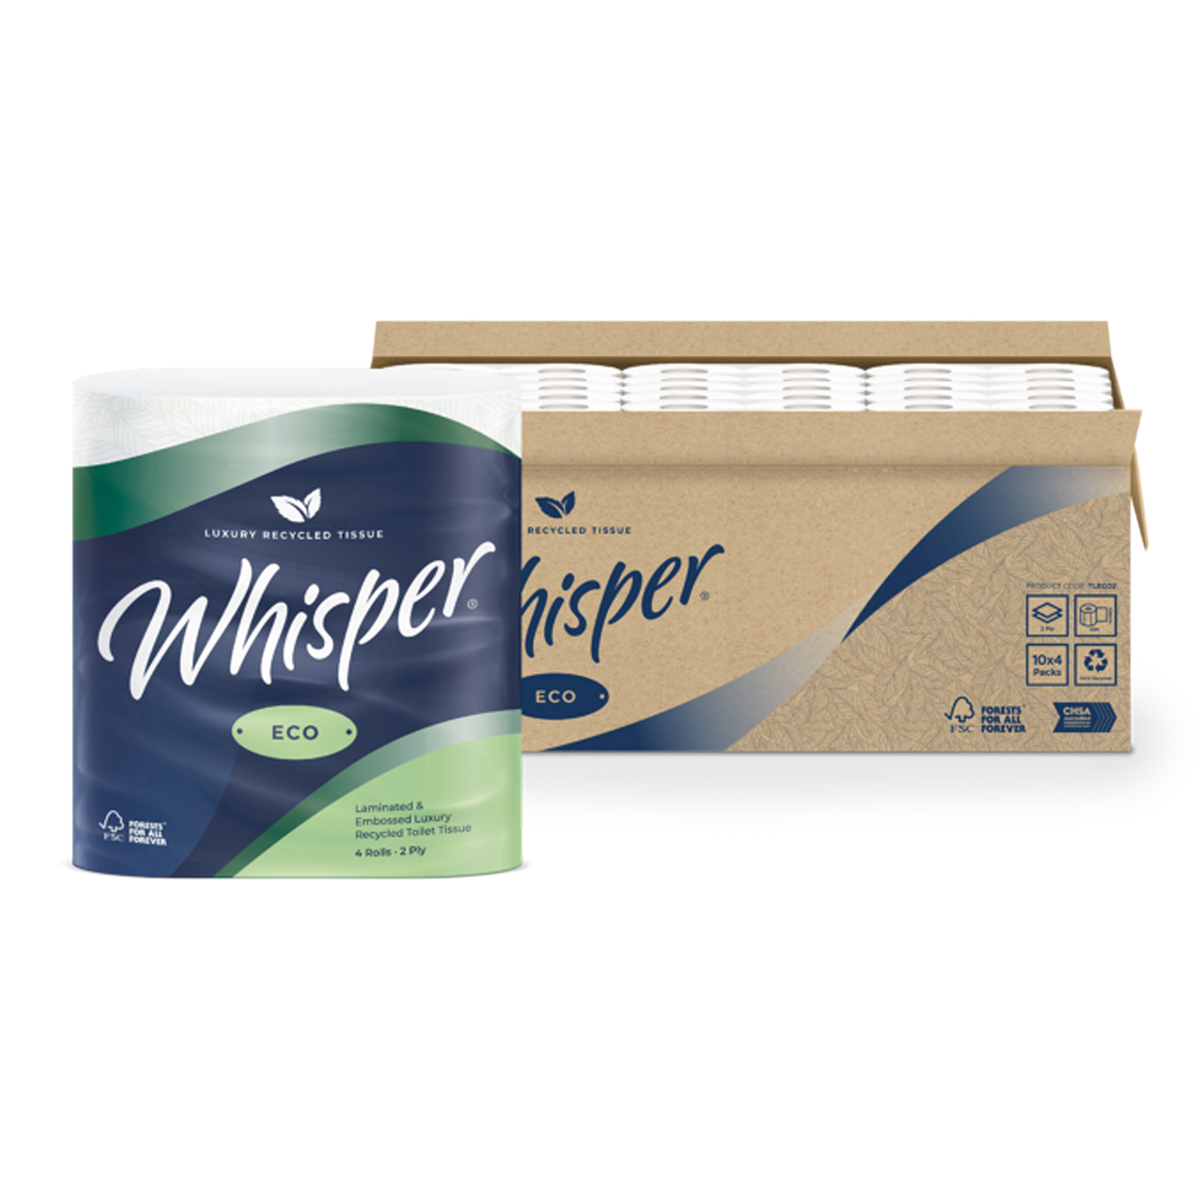 Whisper eco 2 ply toilet roll plastic free 4 pack (10 x 4 rolls) - 40 rolls